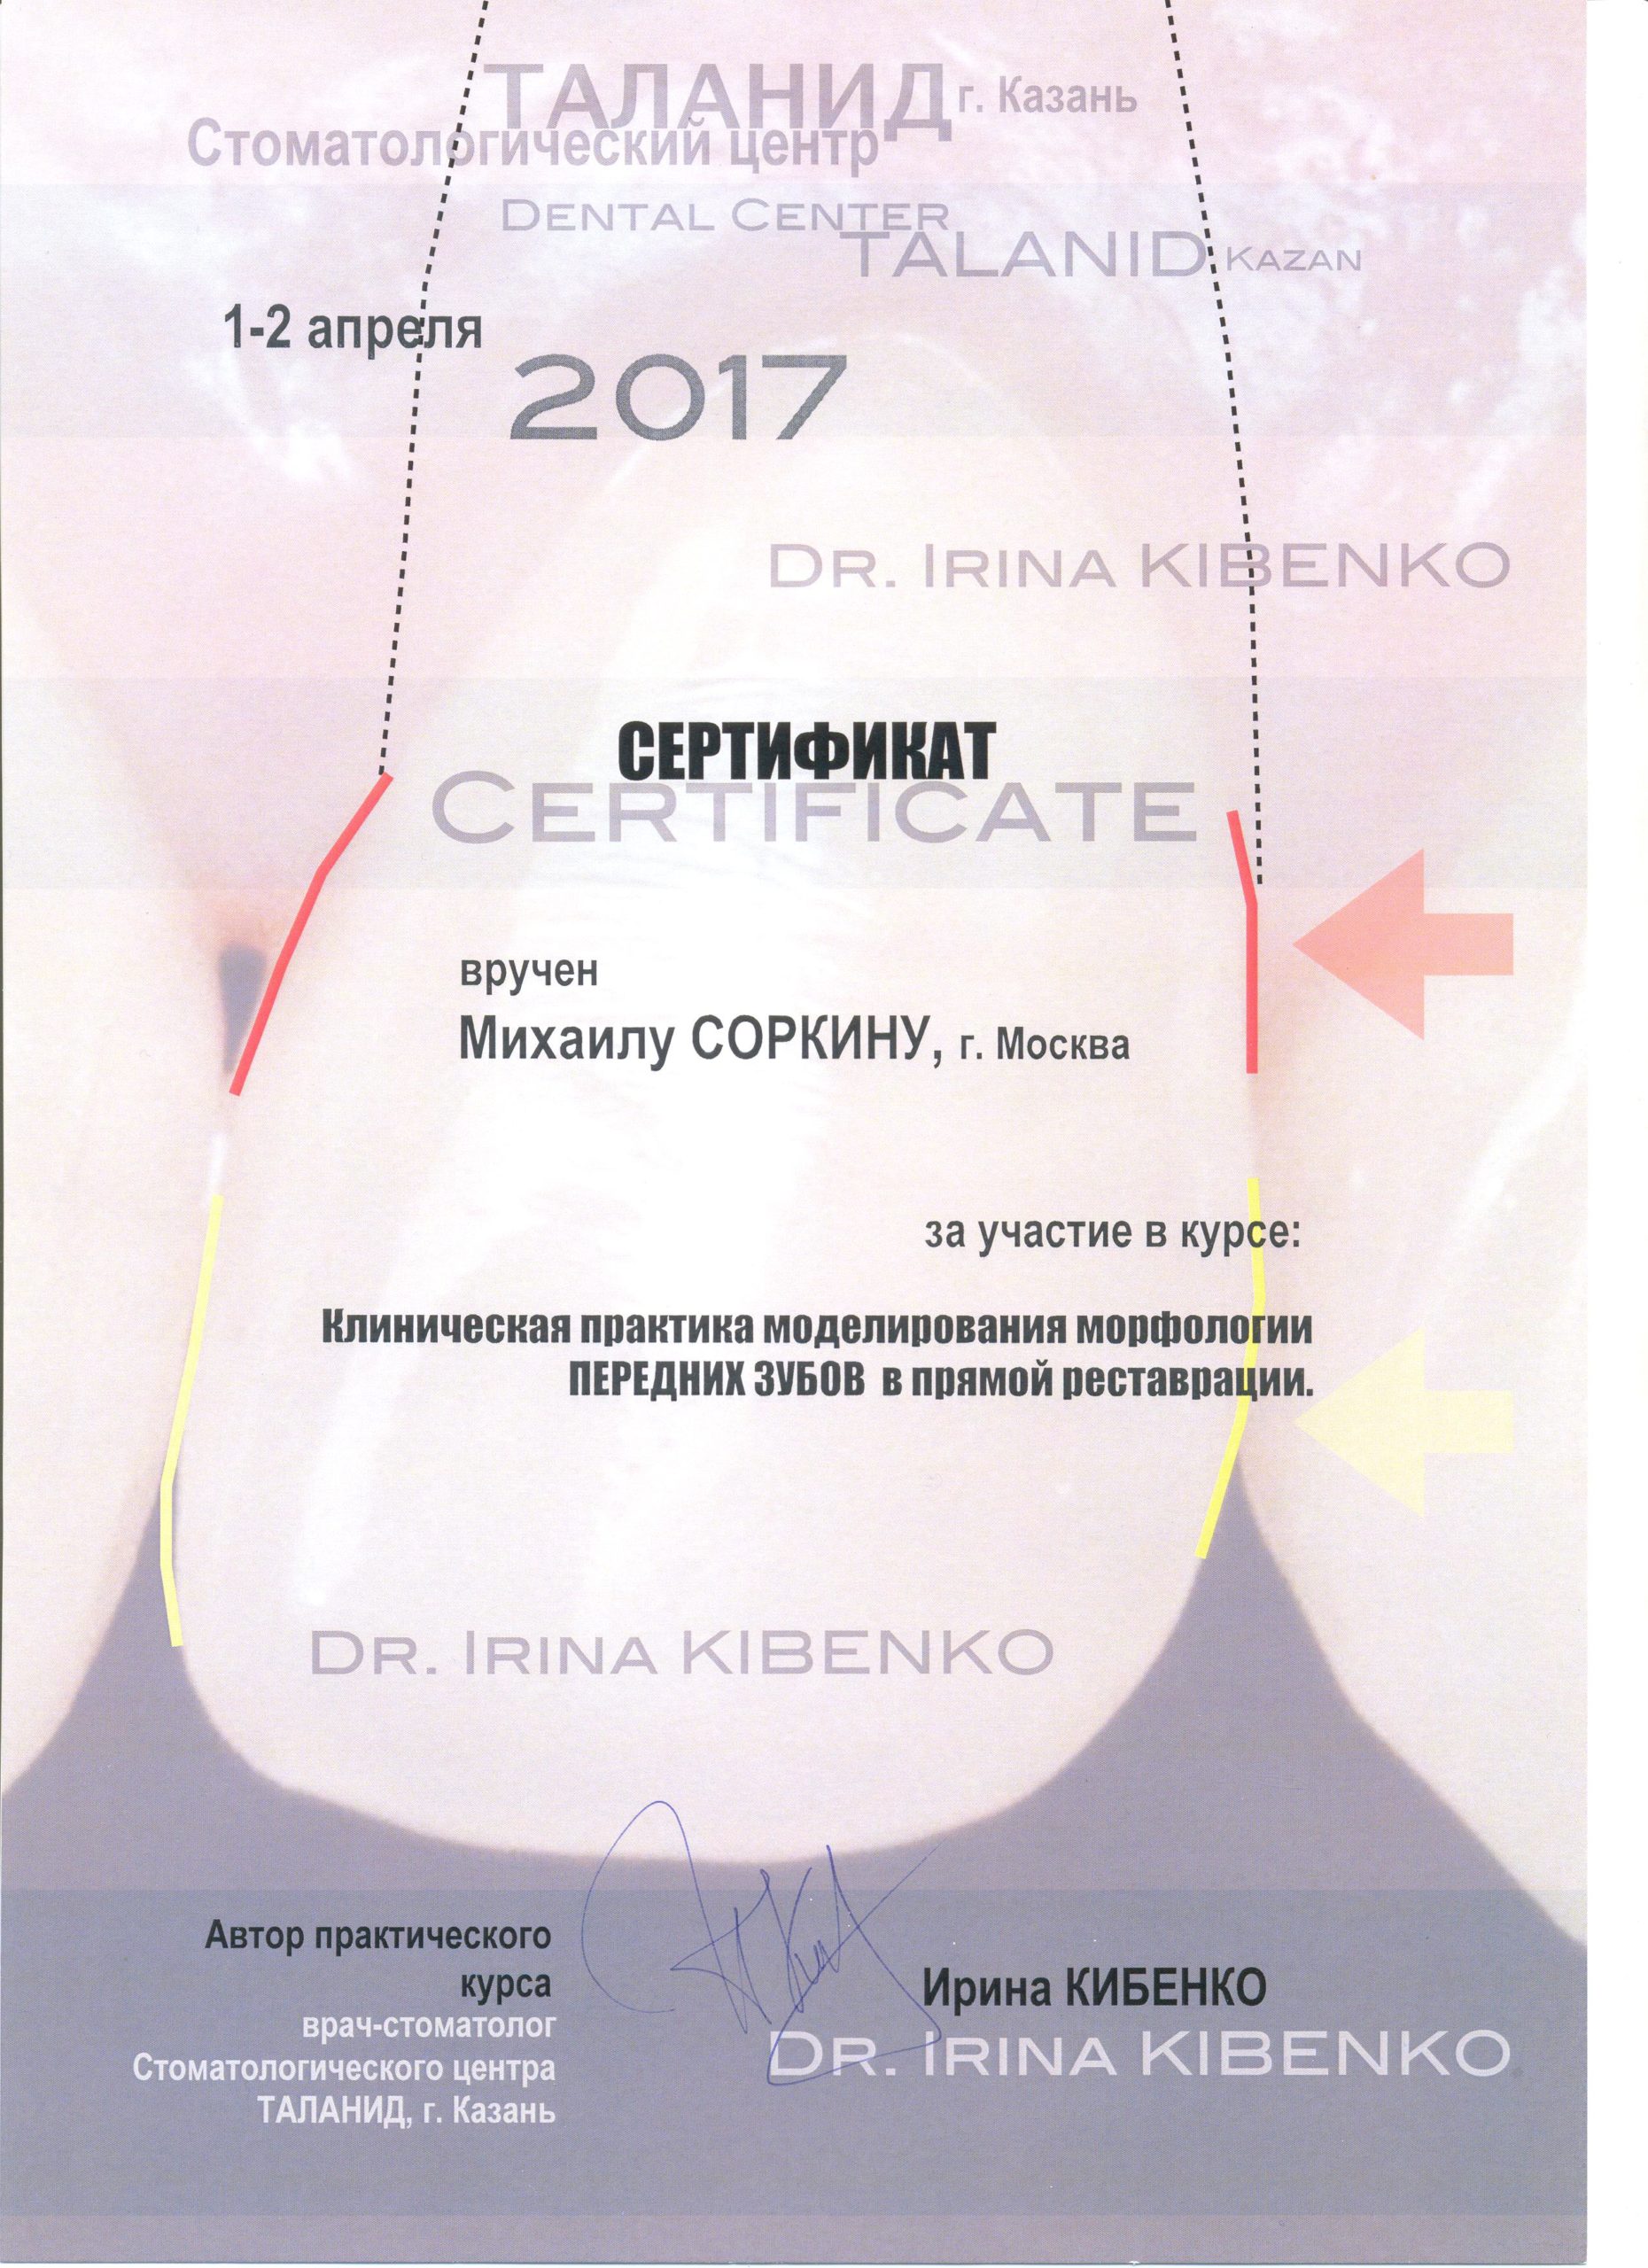 сертификат стоматолога по курсам Соркин 2017